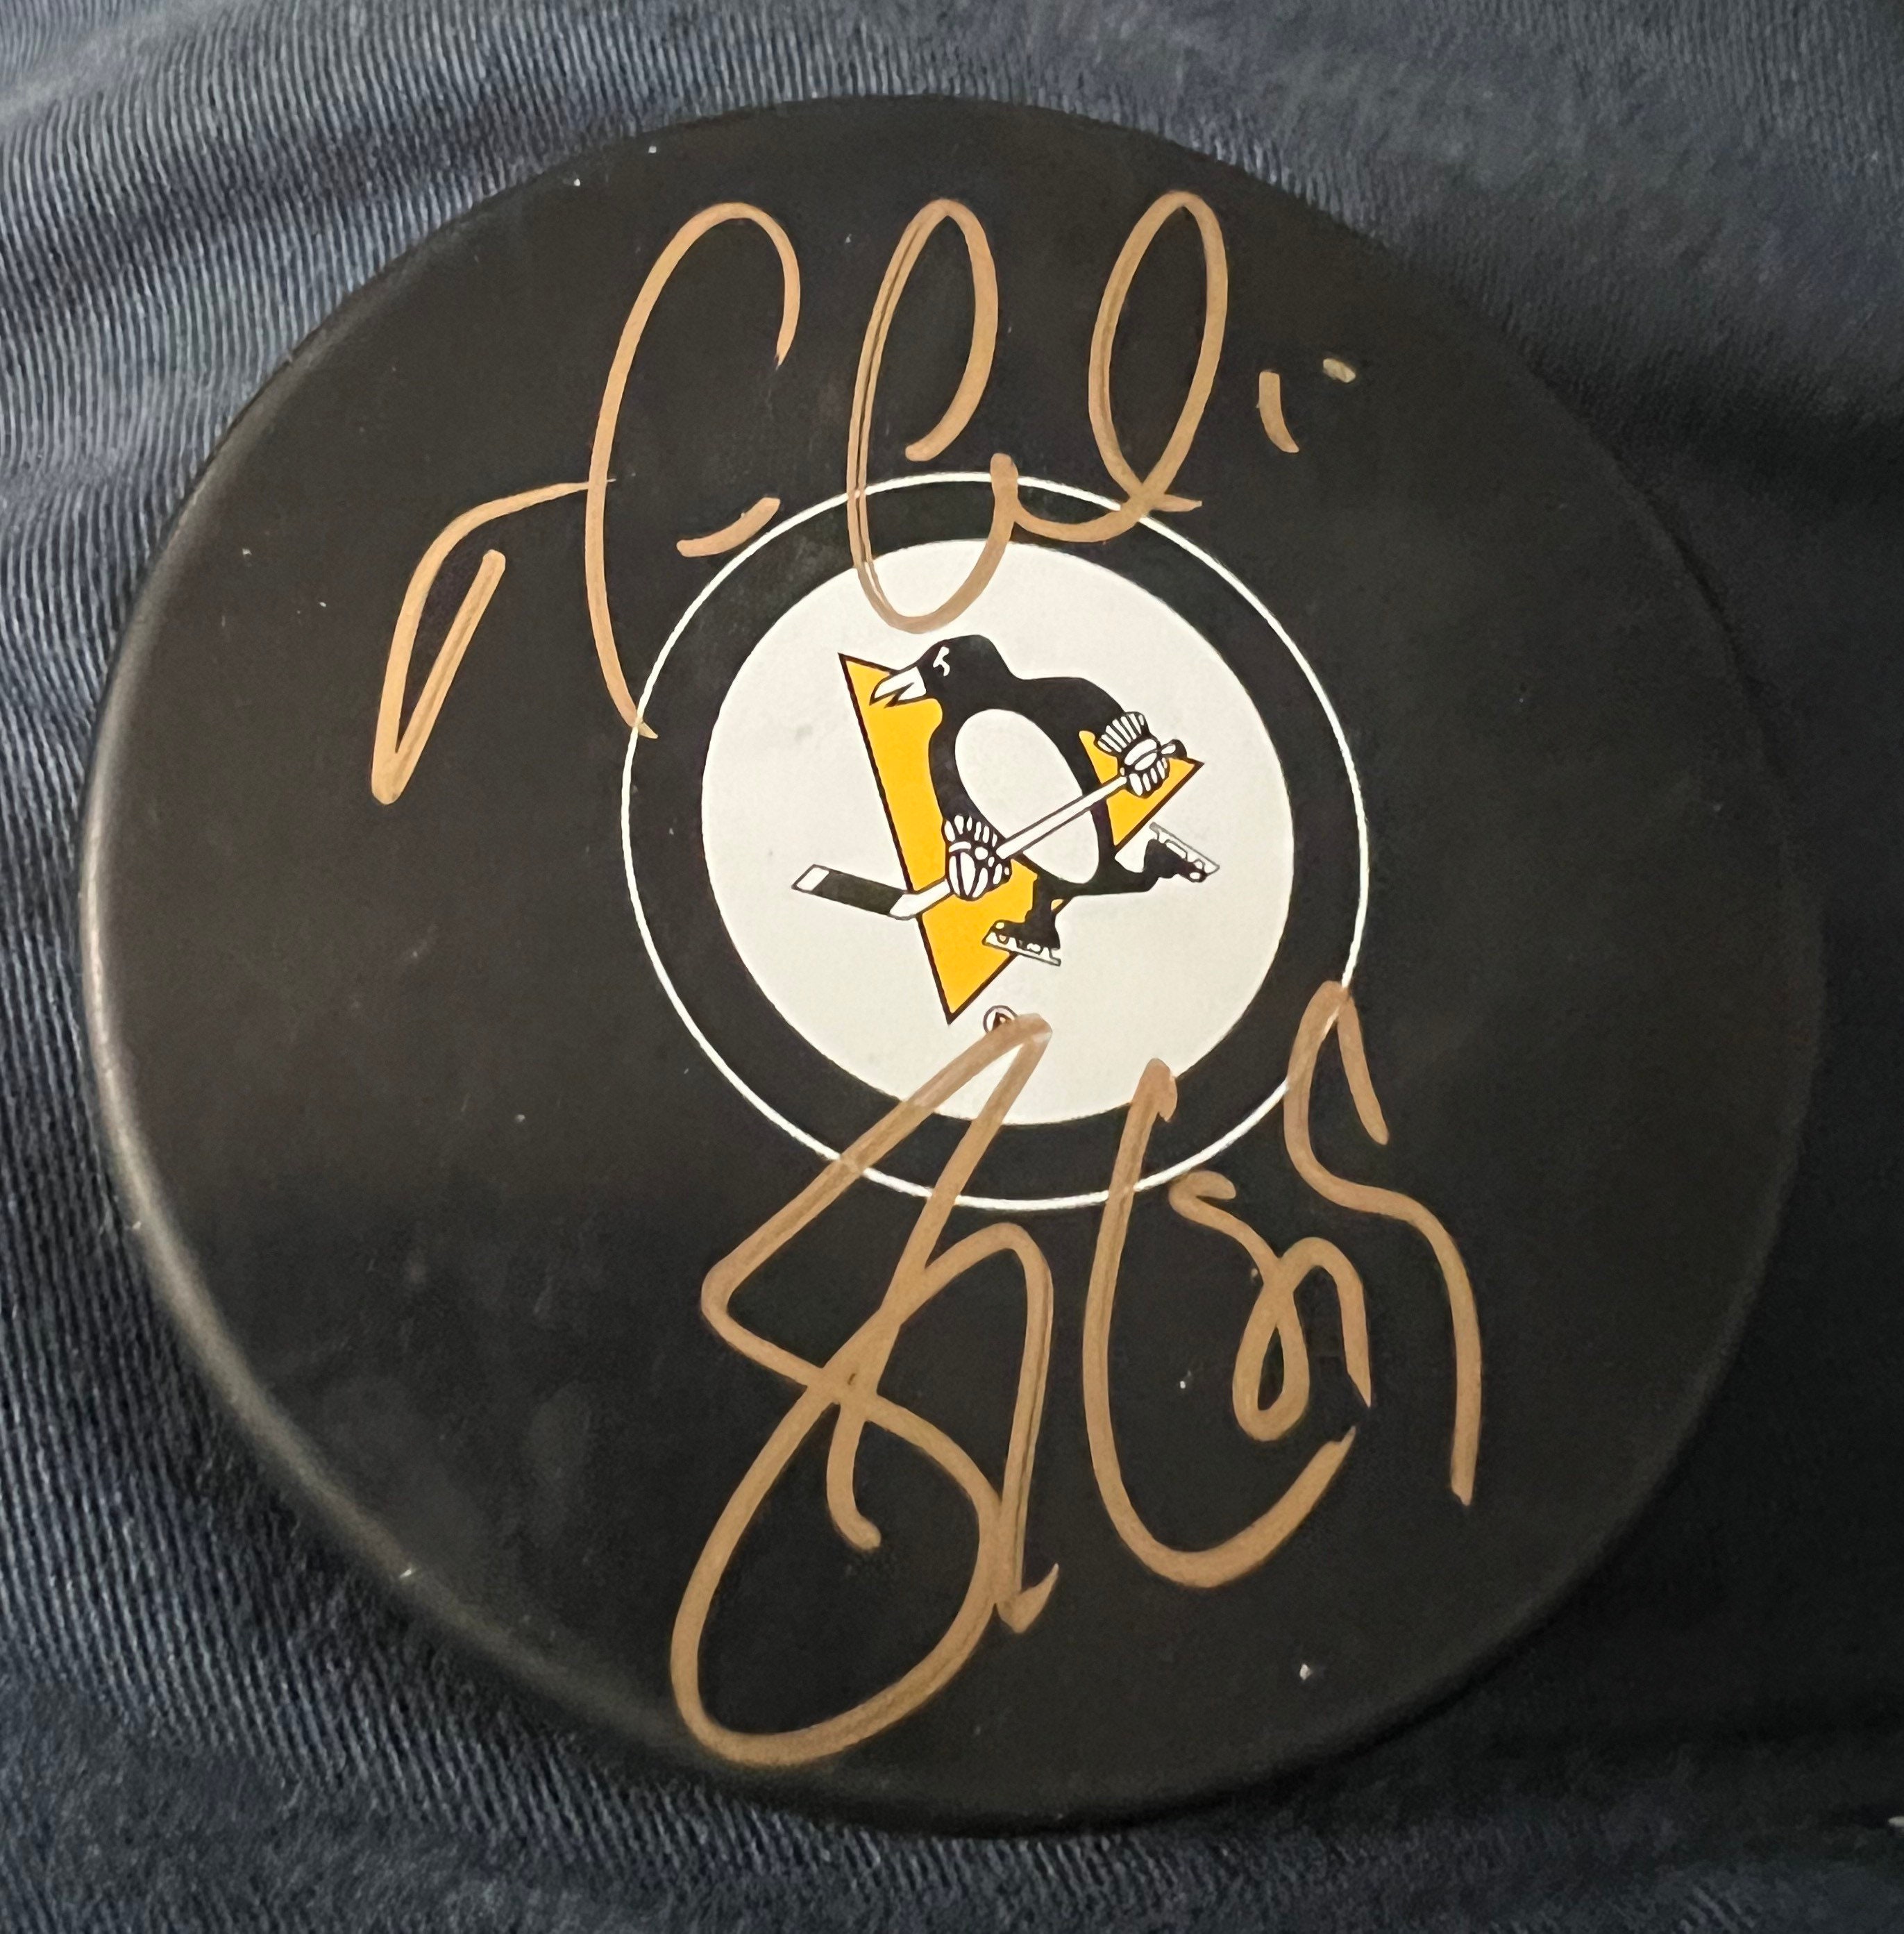 Evgeni Malkin Autographed Signed Alternate Hockey Custom Jersey